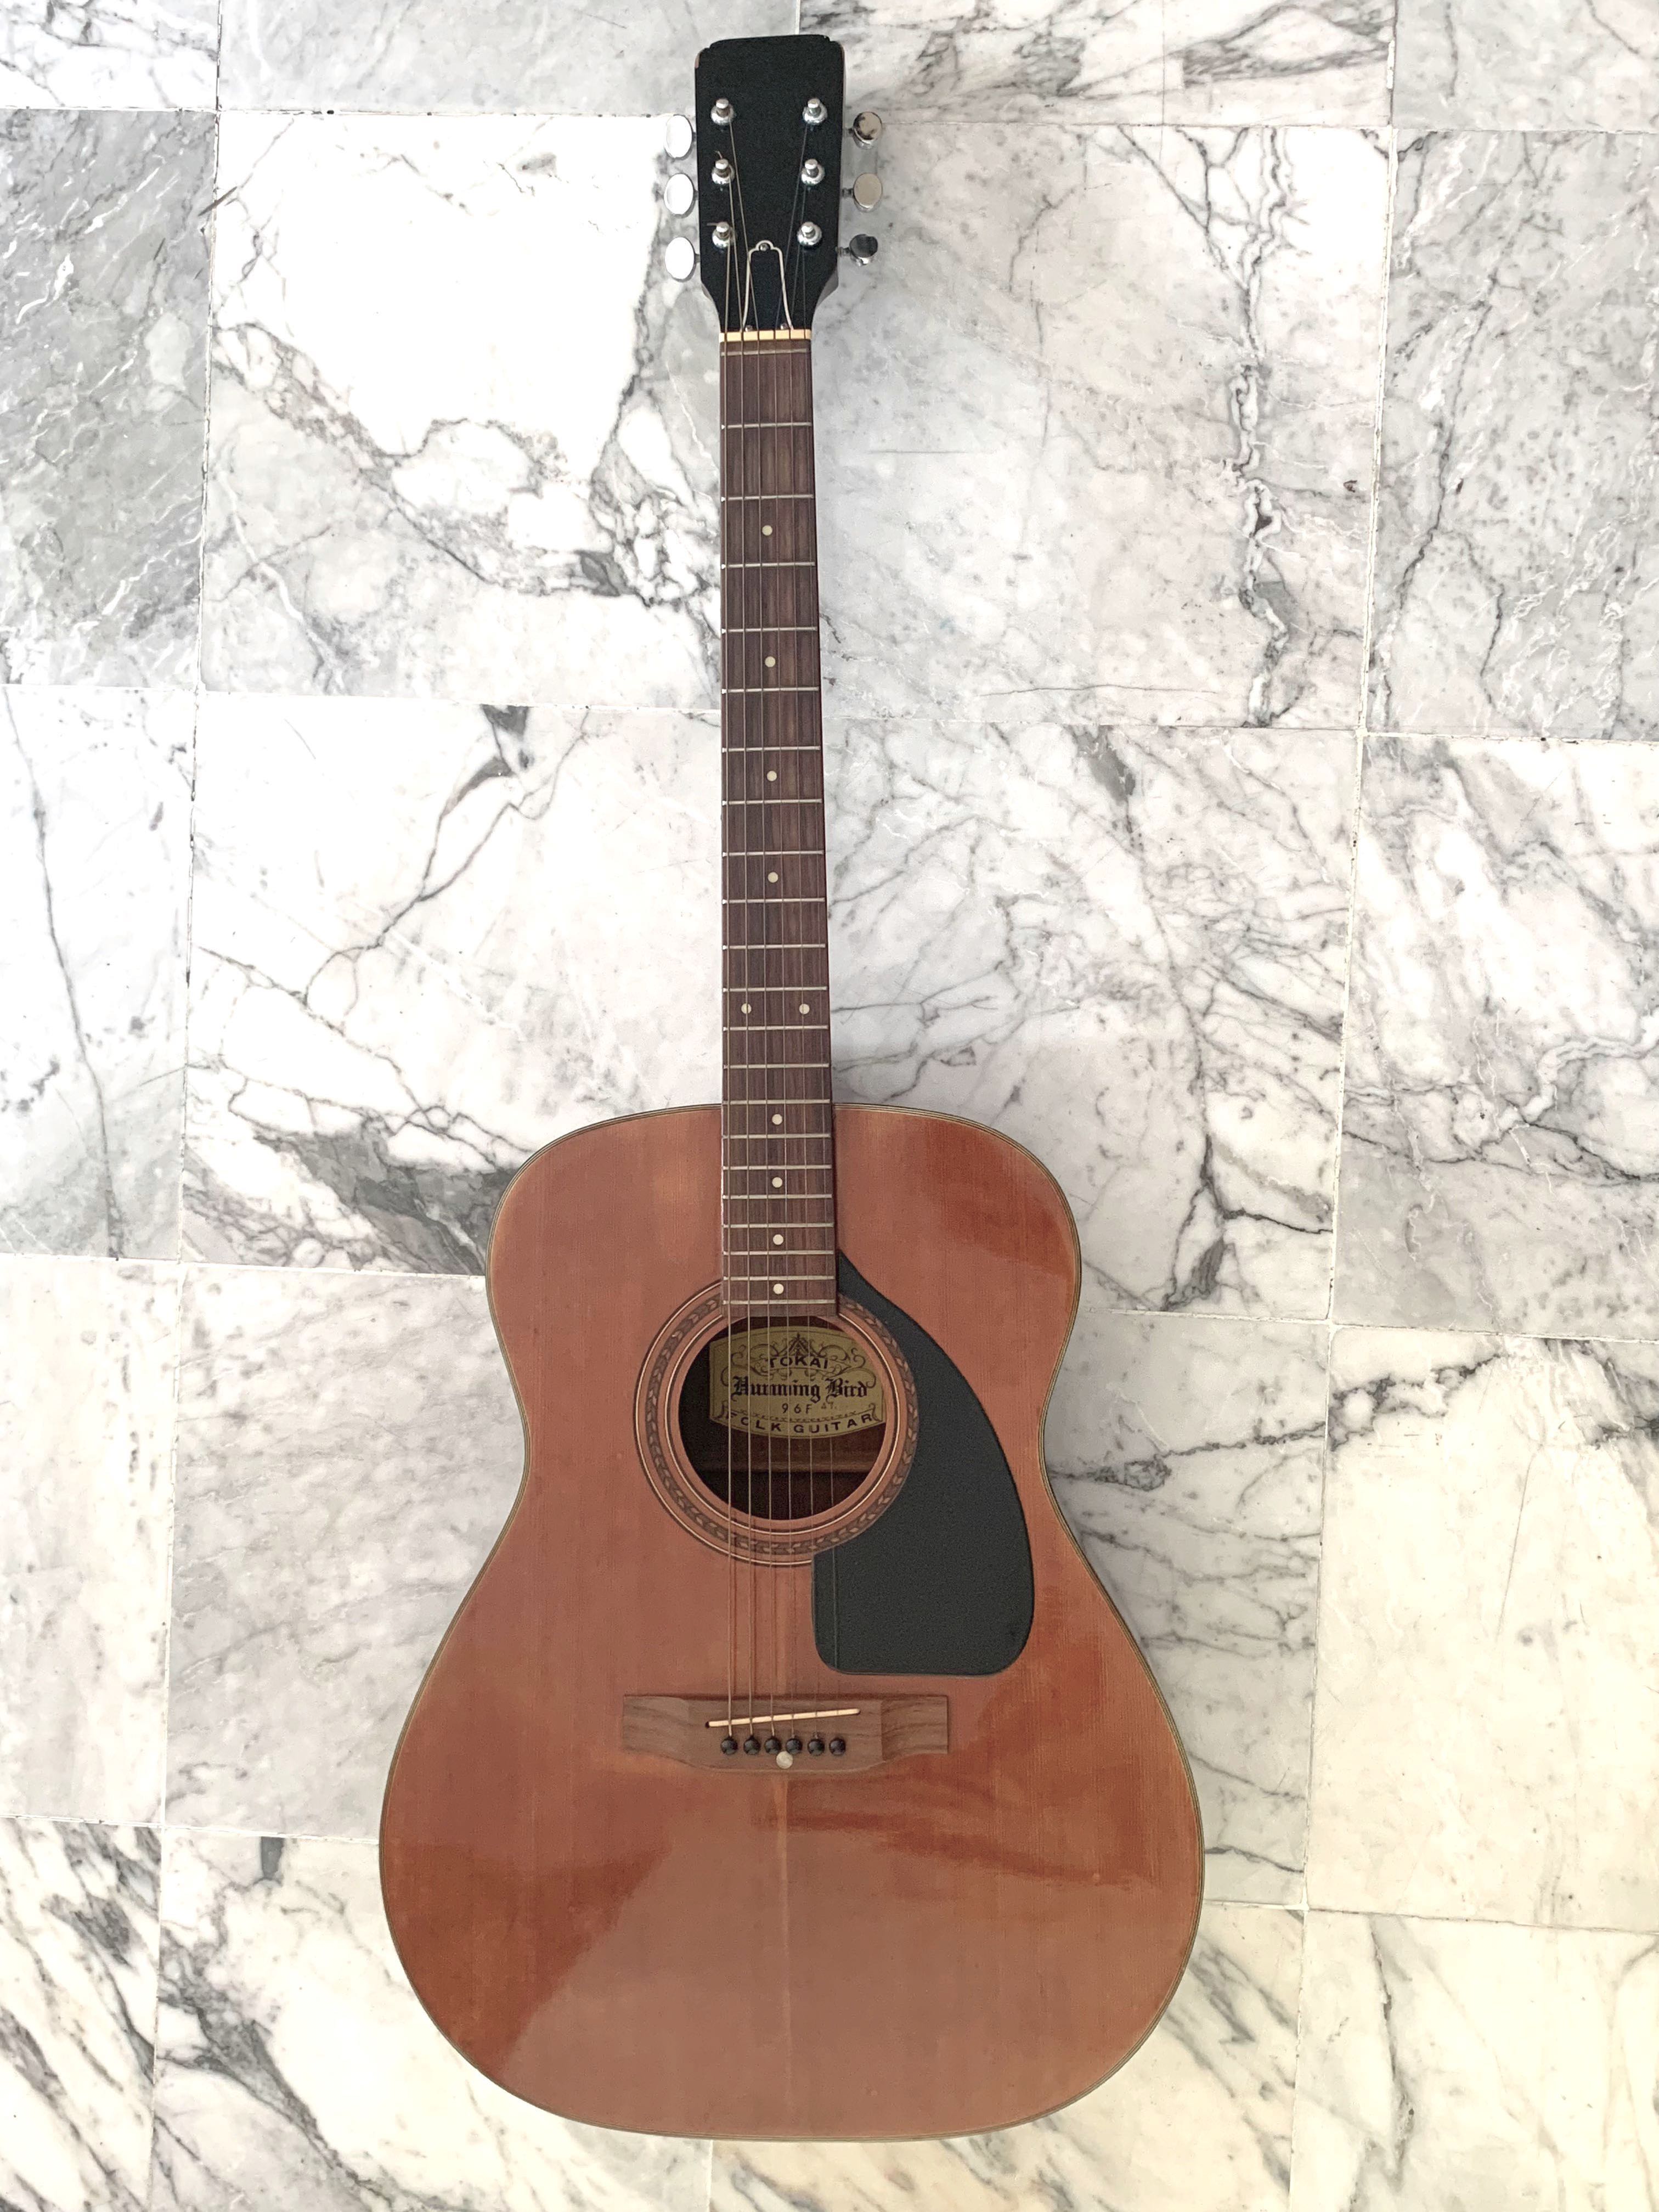 Tokai folk guitar “humming bird” 96F, Hobbies & Toys, Music